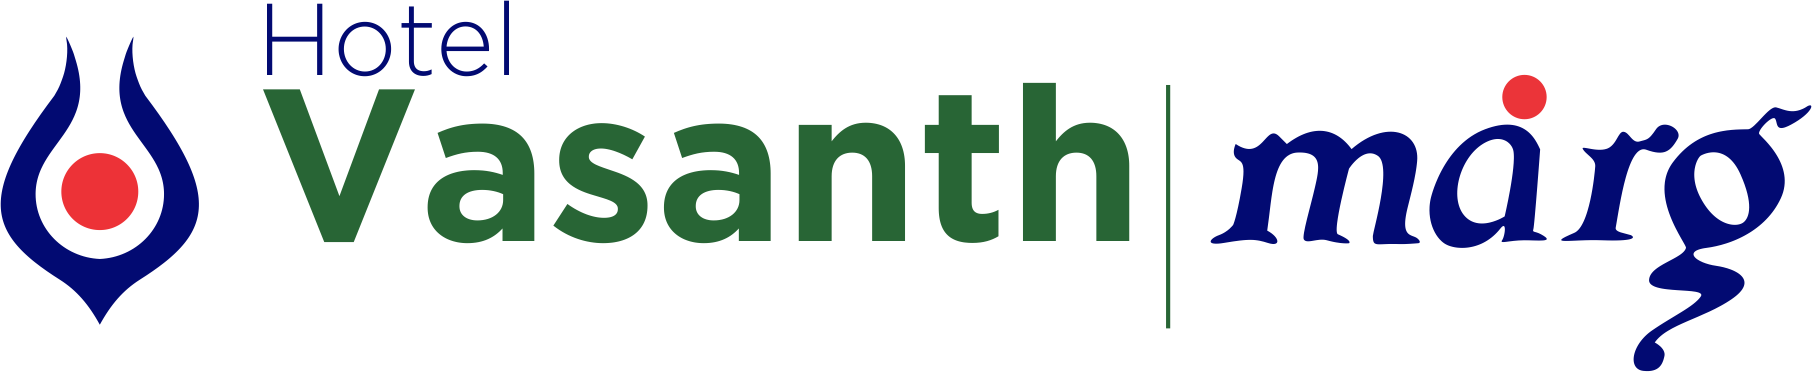 Hotel Vasanth Marg Logo